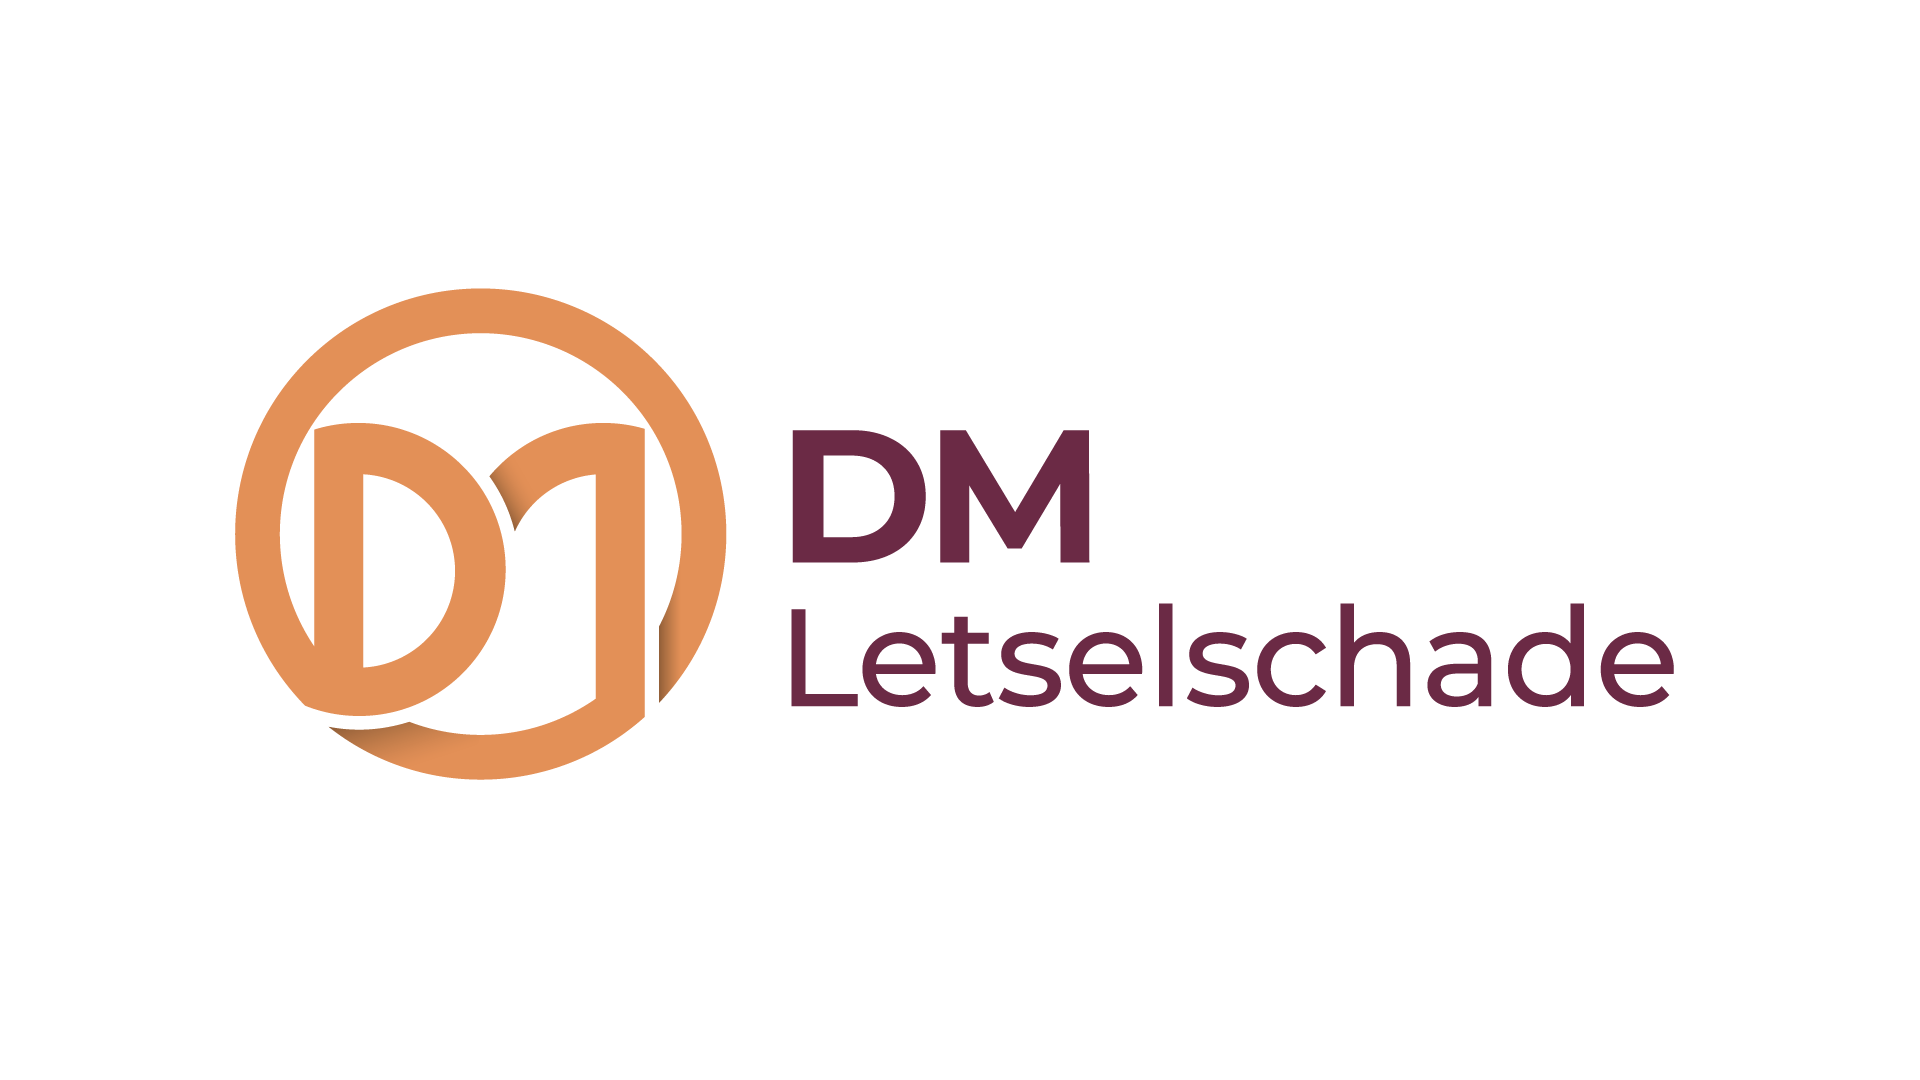 DM Letselschade logo 9